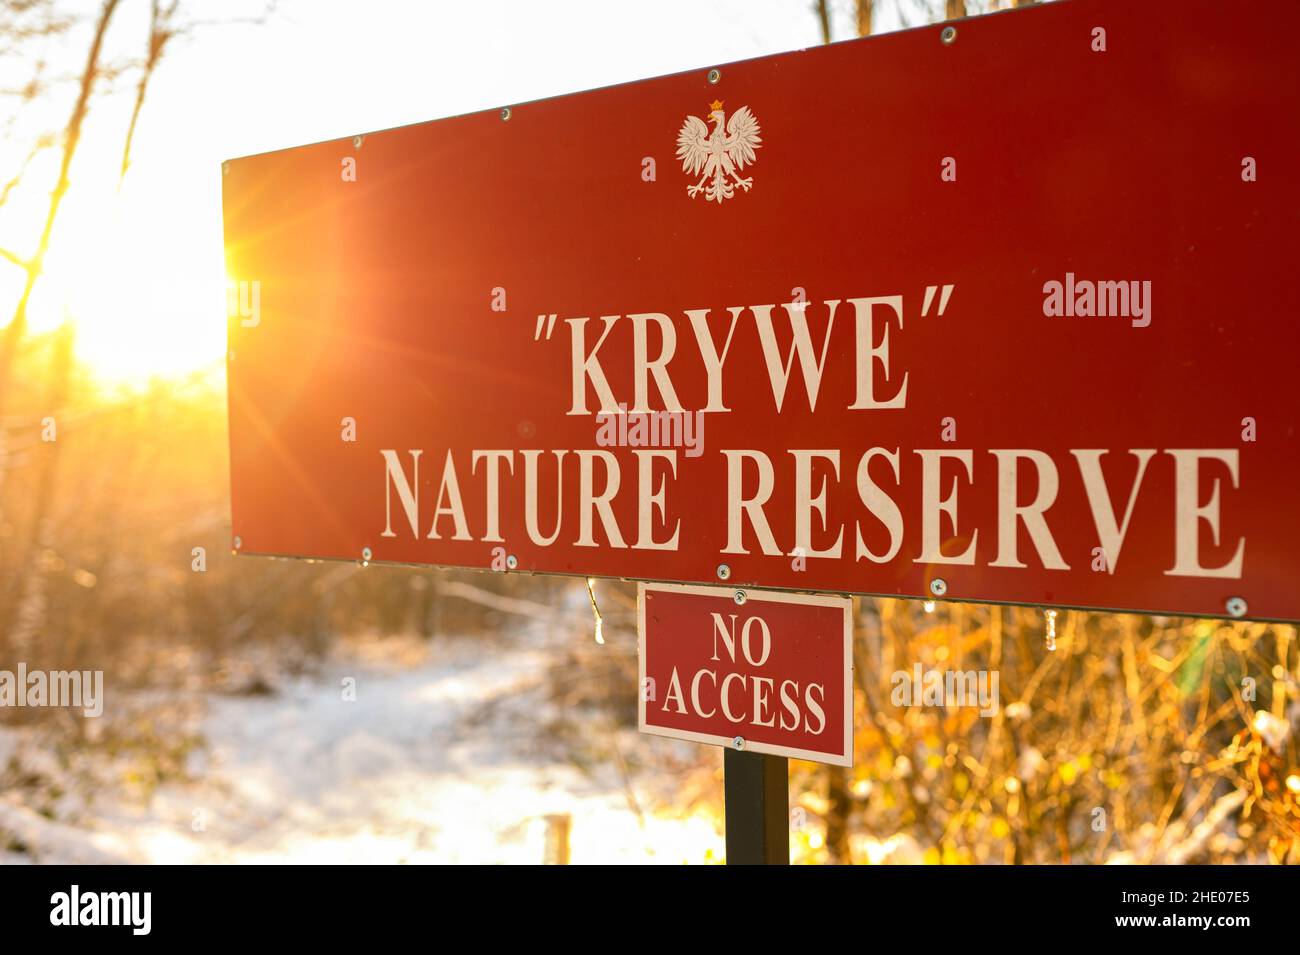 Natural Reserve No Access sign. Poland. Stock Photo